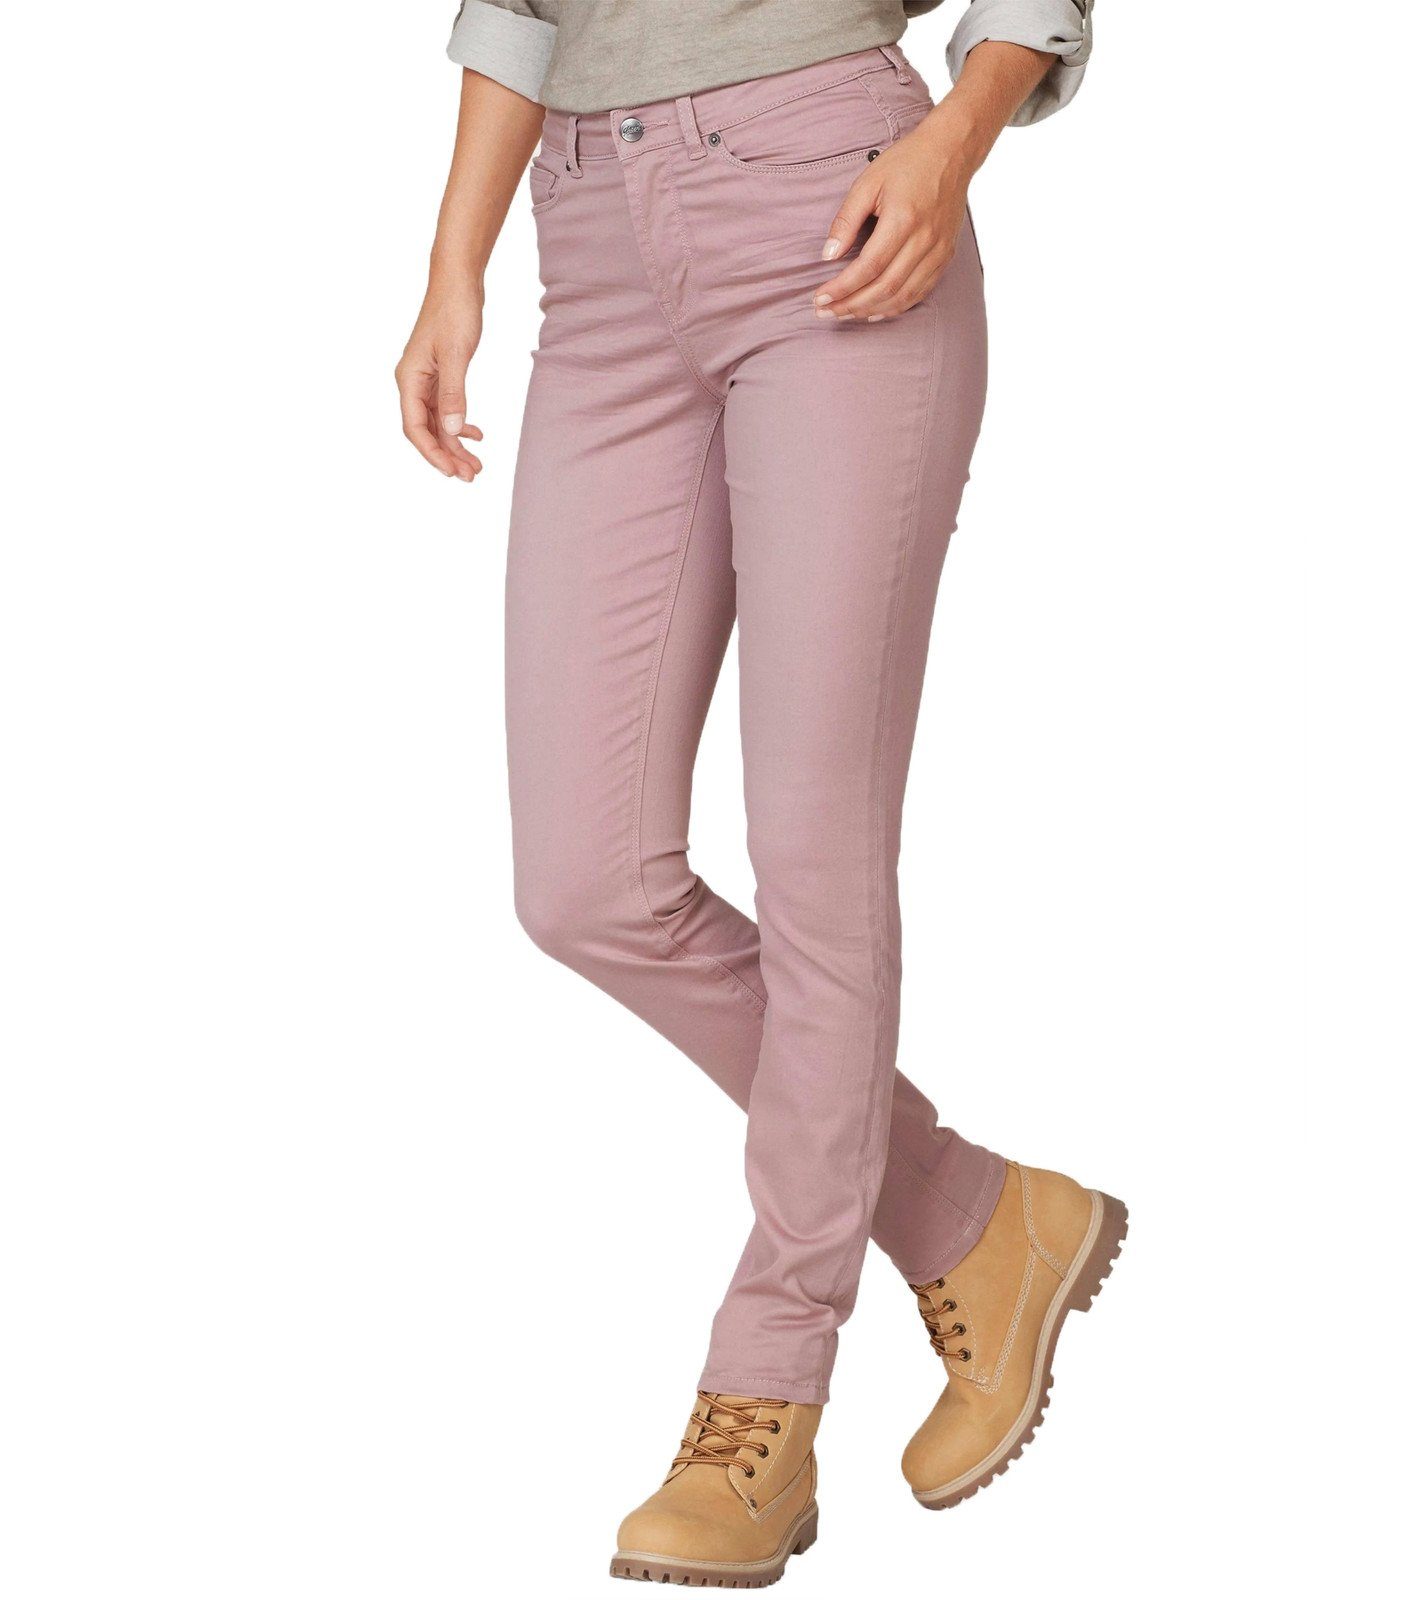 Cheer Regular-fit-Jeans »Cheer Hose Color-Jeans bequeme Damen Jeans-Hose  mit Crinkle-Effekten Kurzgröße Trend-Hose Rosa« online kaufen | OTTO